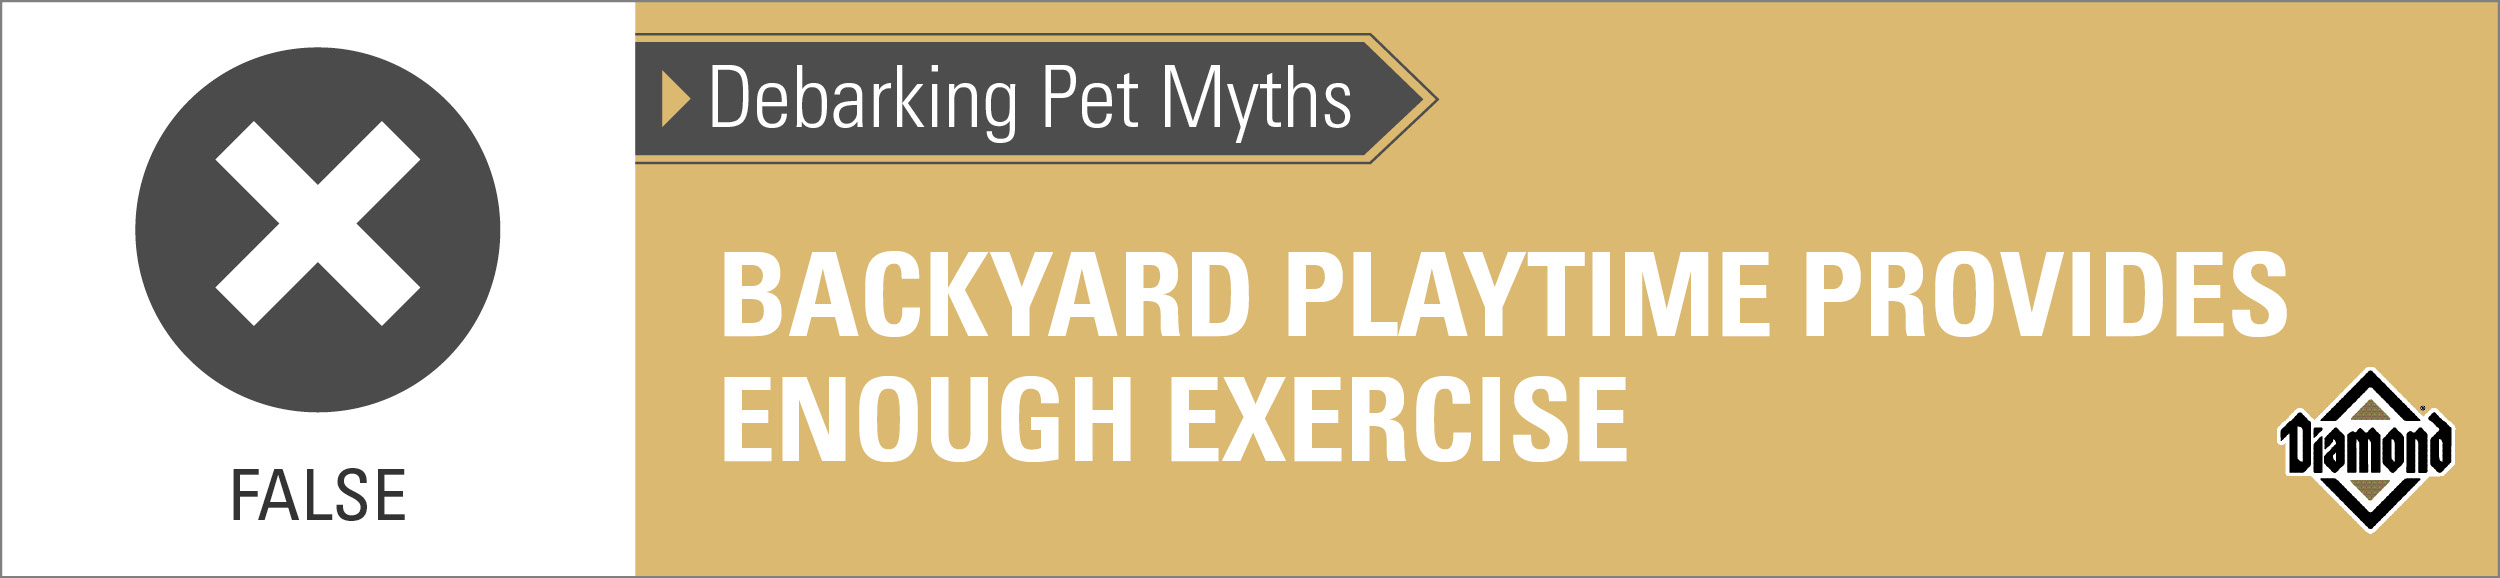 False: Backyard Playtime Provides Enough Exercise | Diamond Pet Foods